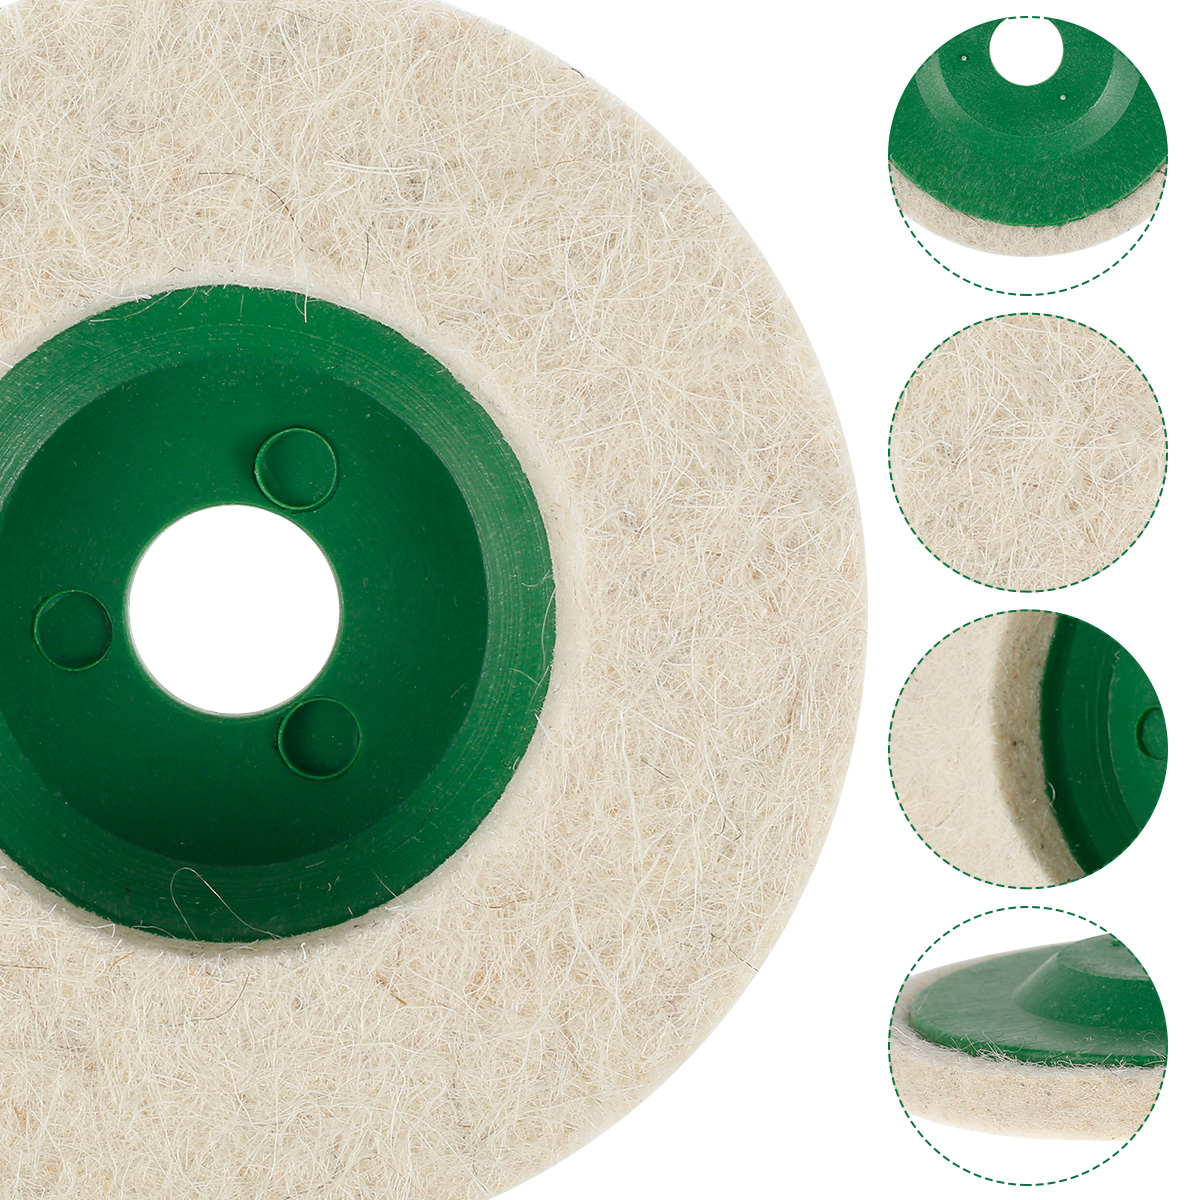 10pcs Wool Polishing Wheel Buffing Pads 100mm Angle Grinder Felt Polishing  Disc